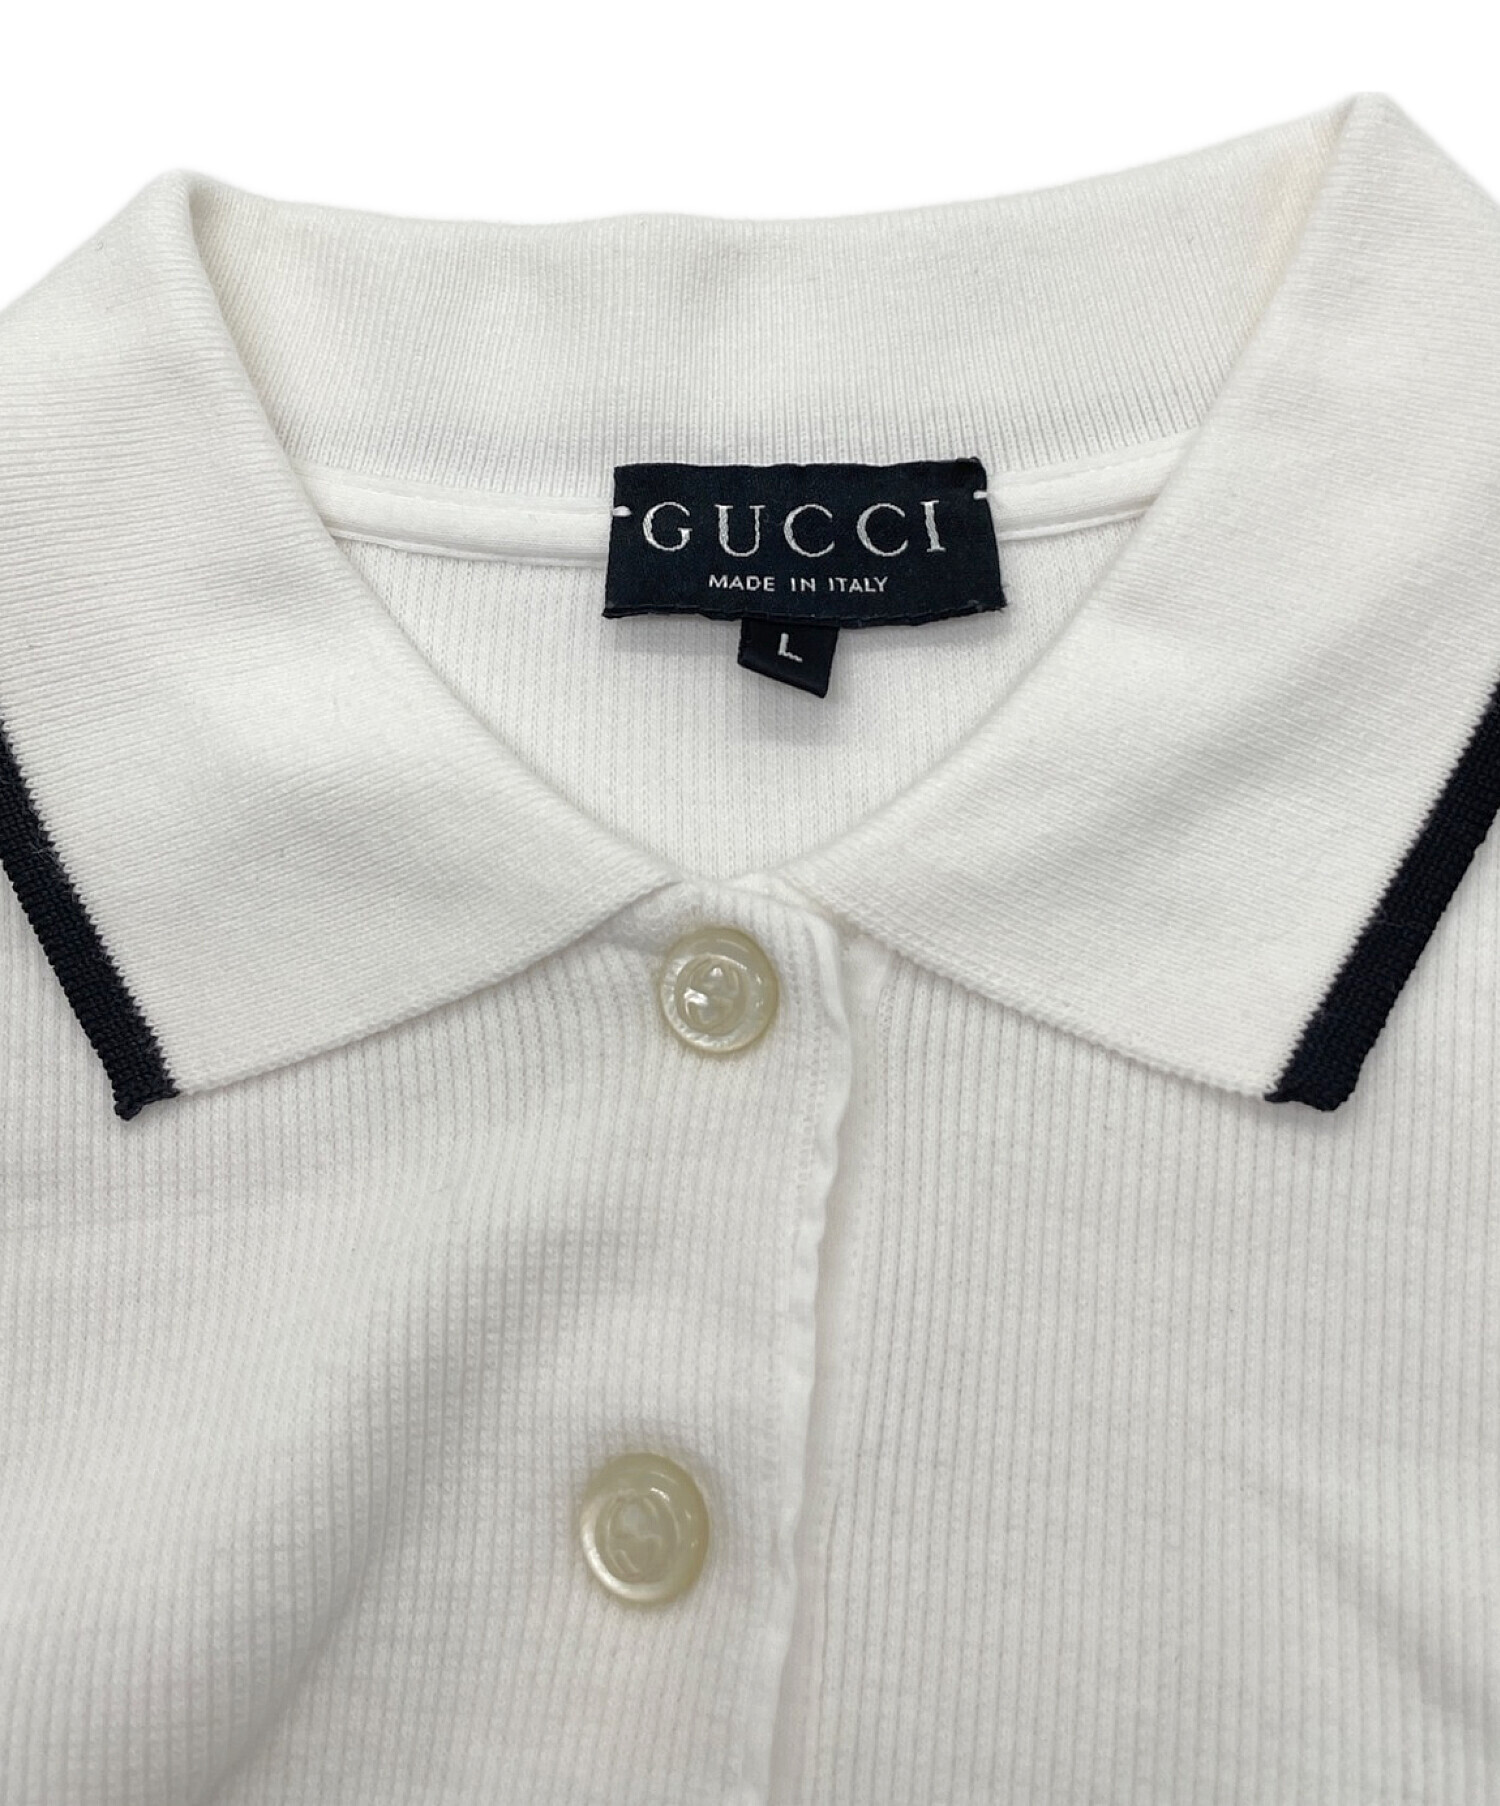 GUCCI (グッチ) ロゴ刺繍ポロシャツ ホワイト サイズ:L